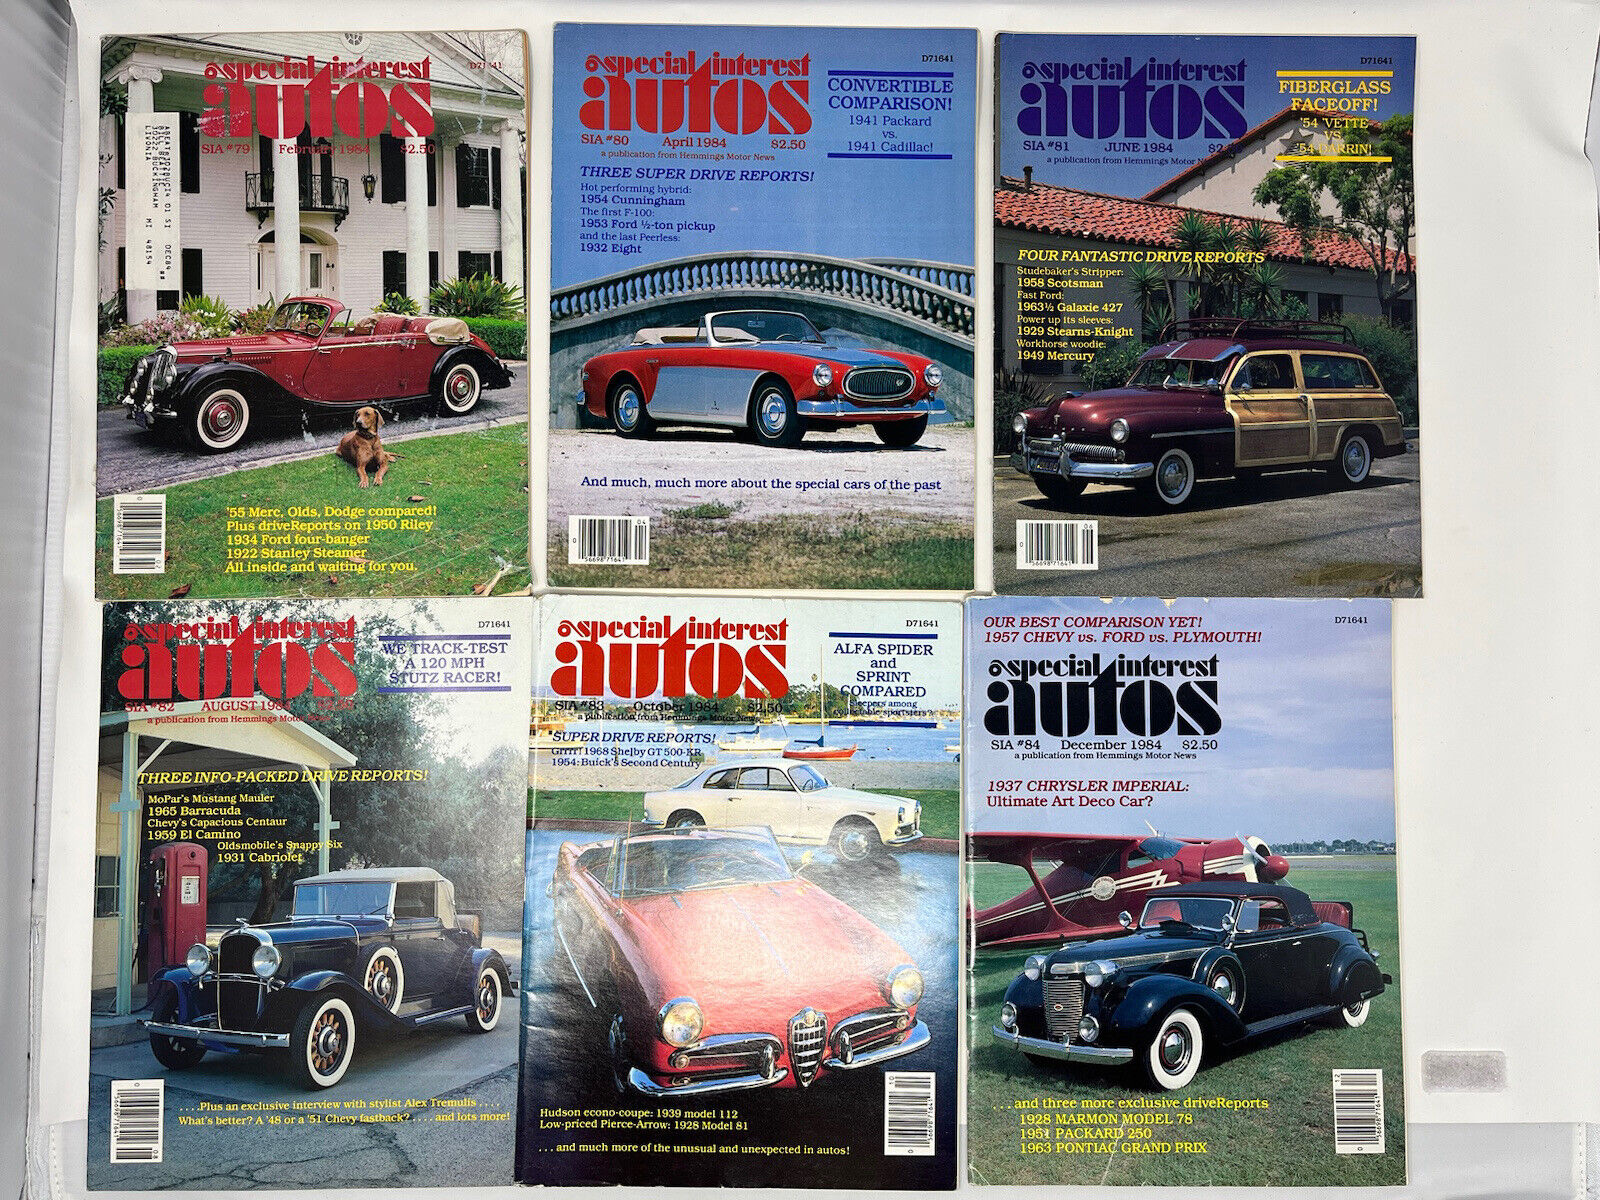  Lot of 6 1984 Special Interest Autos Magazines Complete Set